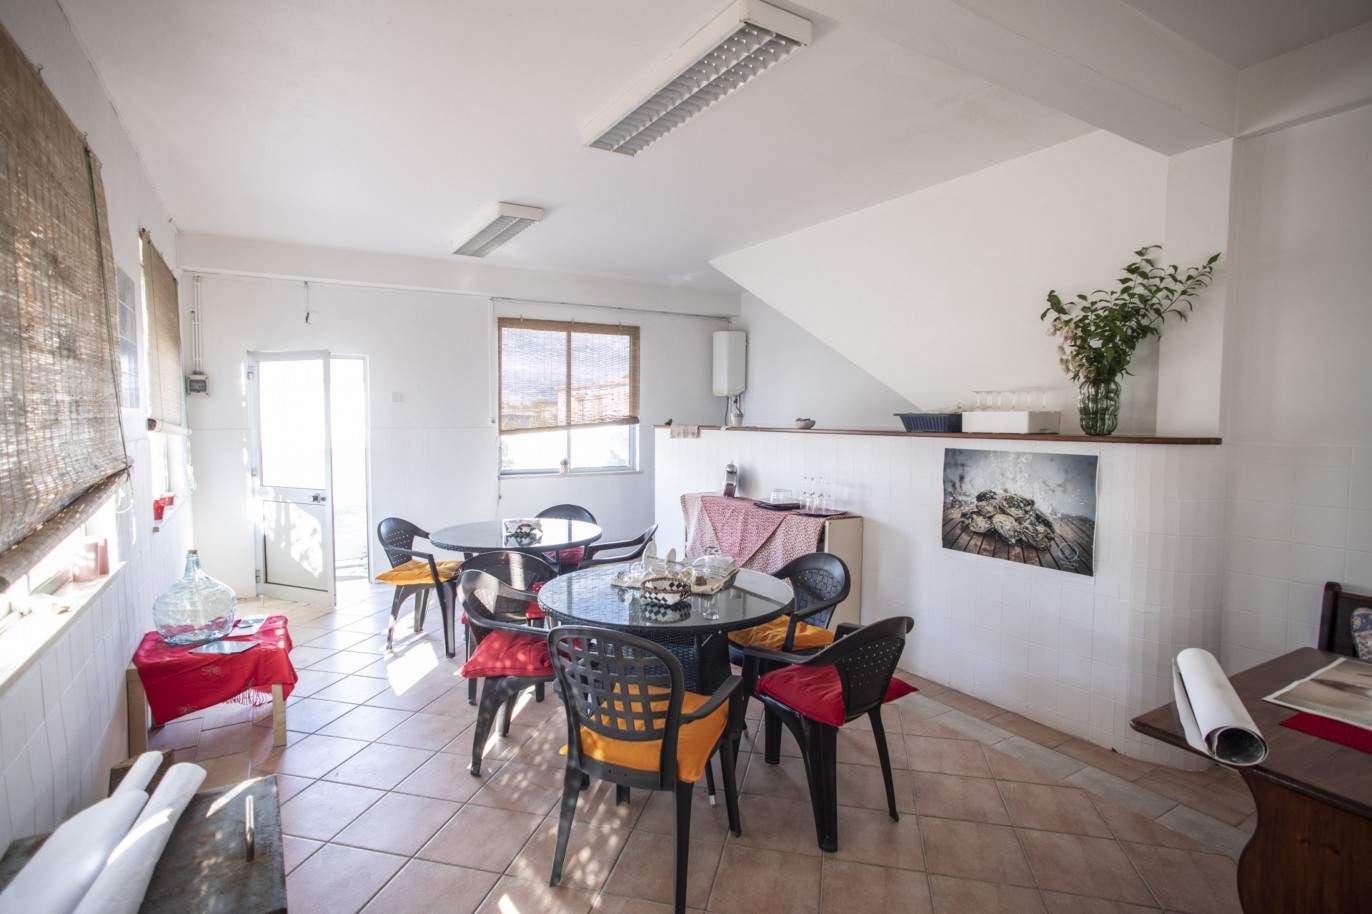 Property for sale in Ria Formosa, Algarve_209731